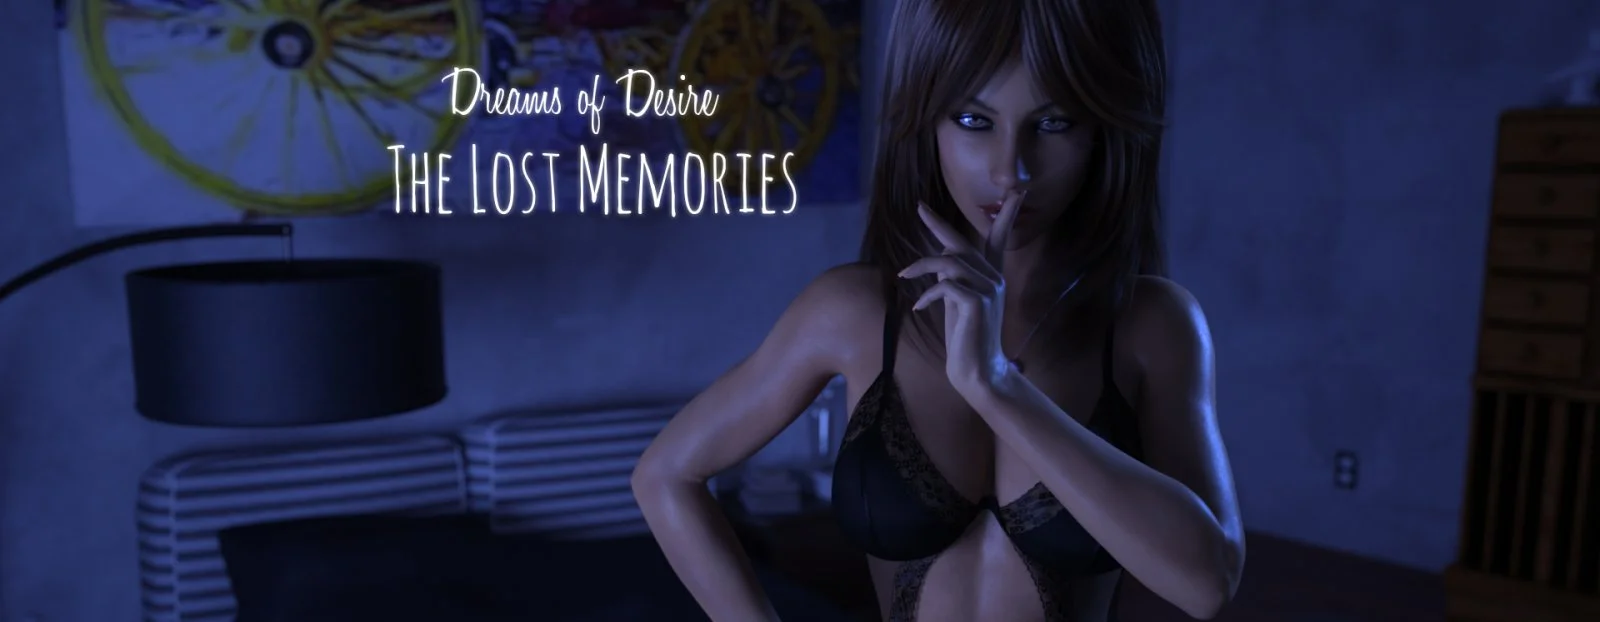 Dreams of Desire: The Lost Memories main image